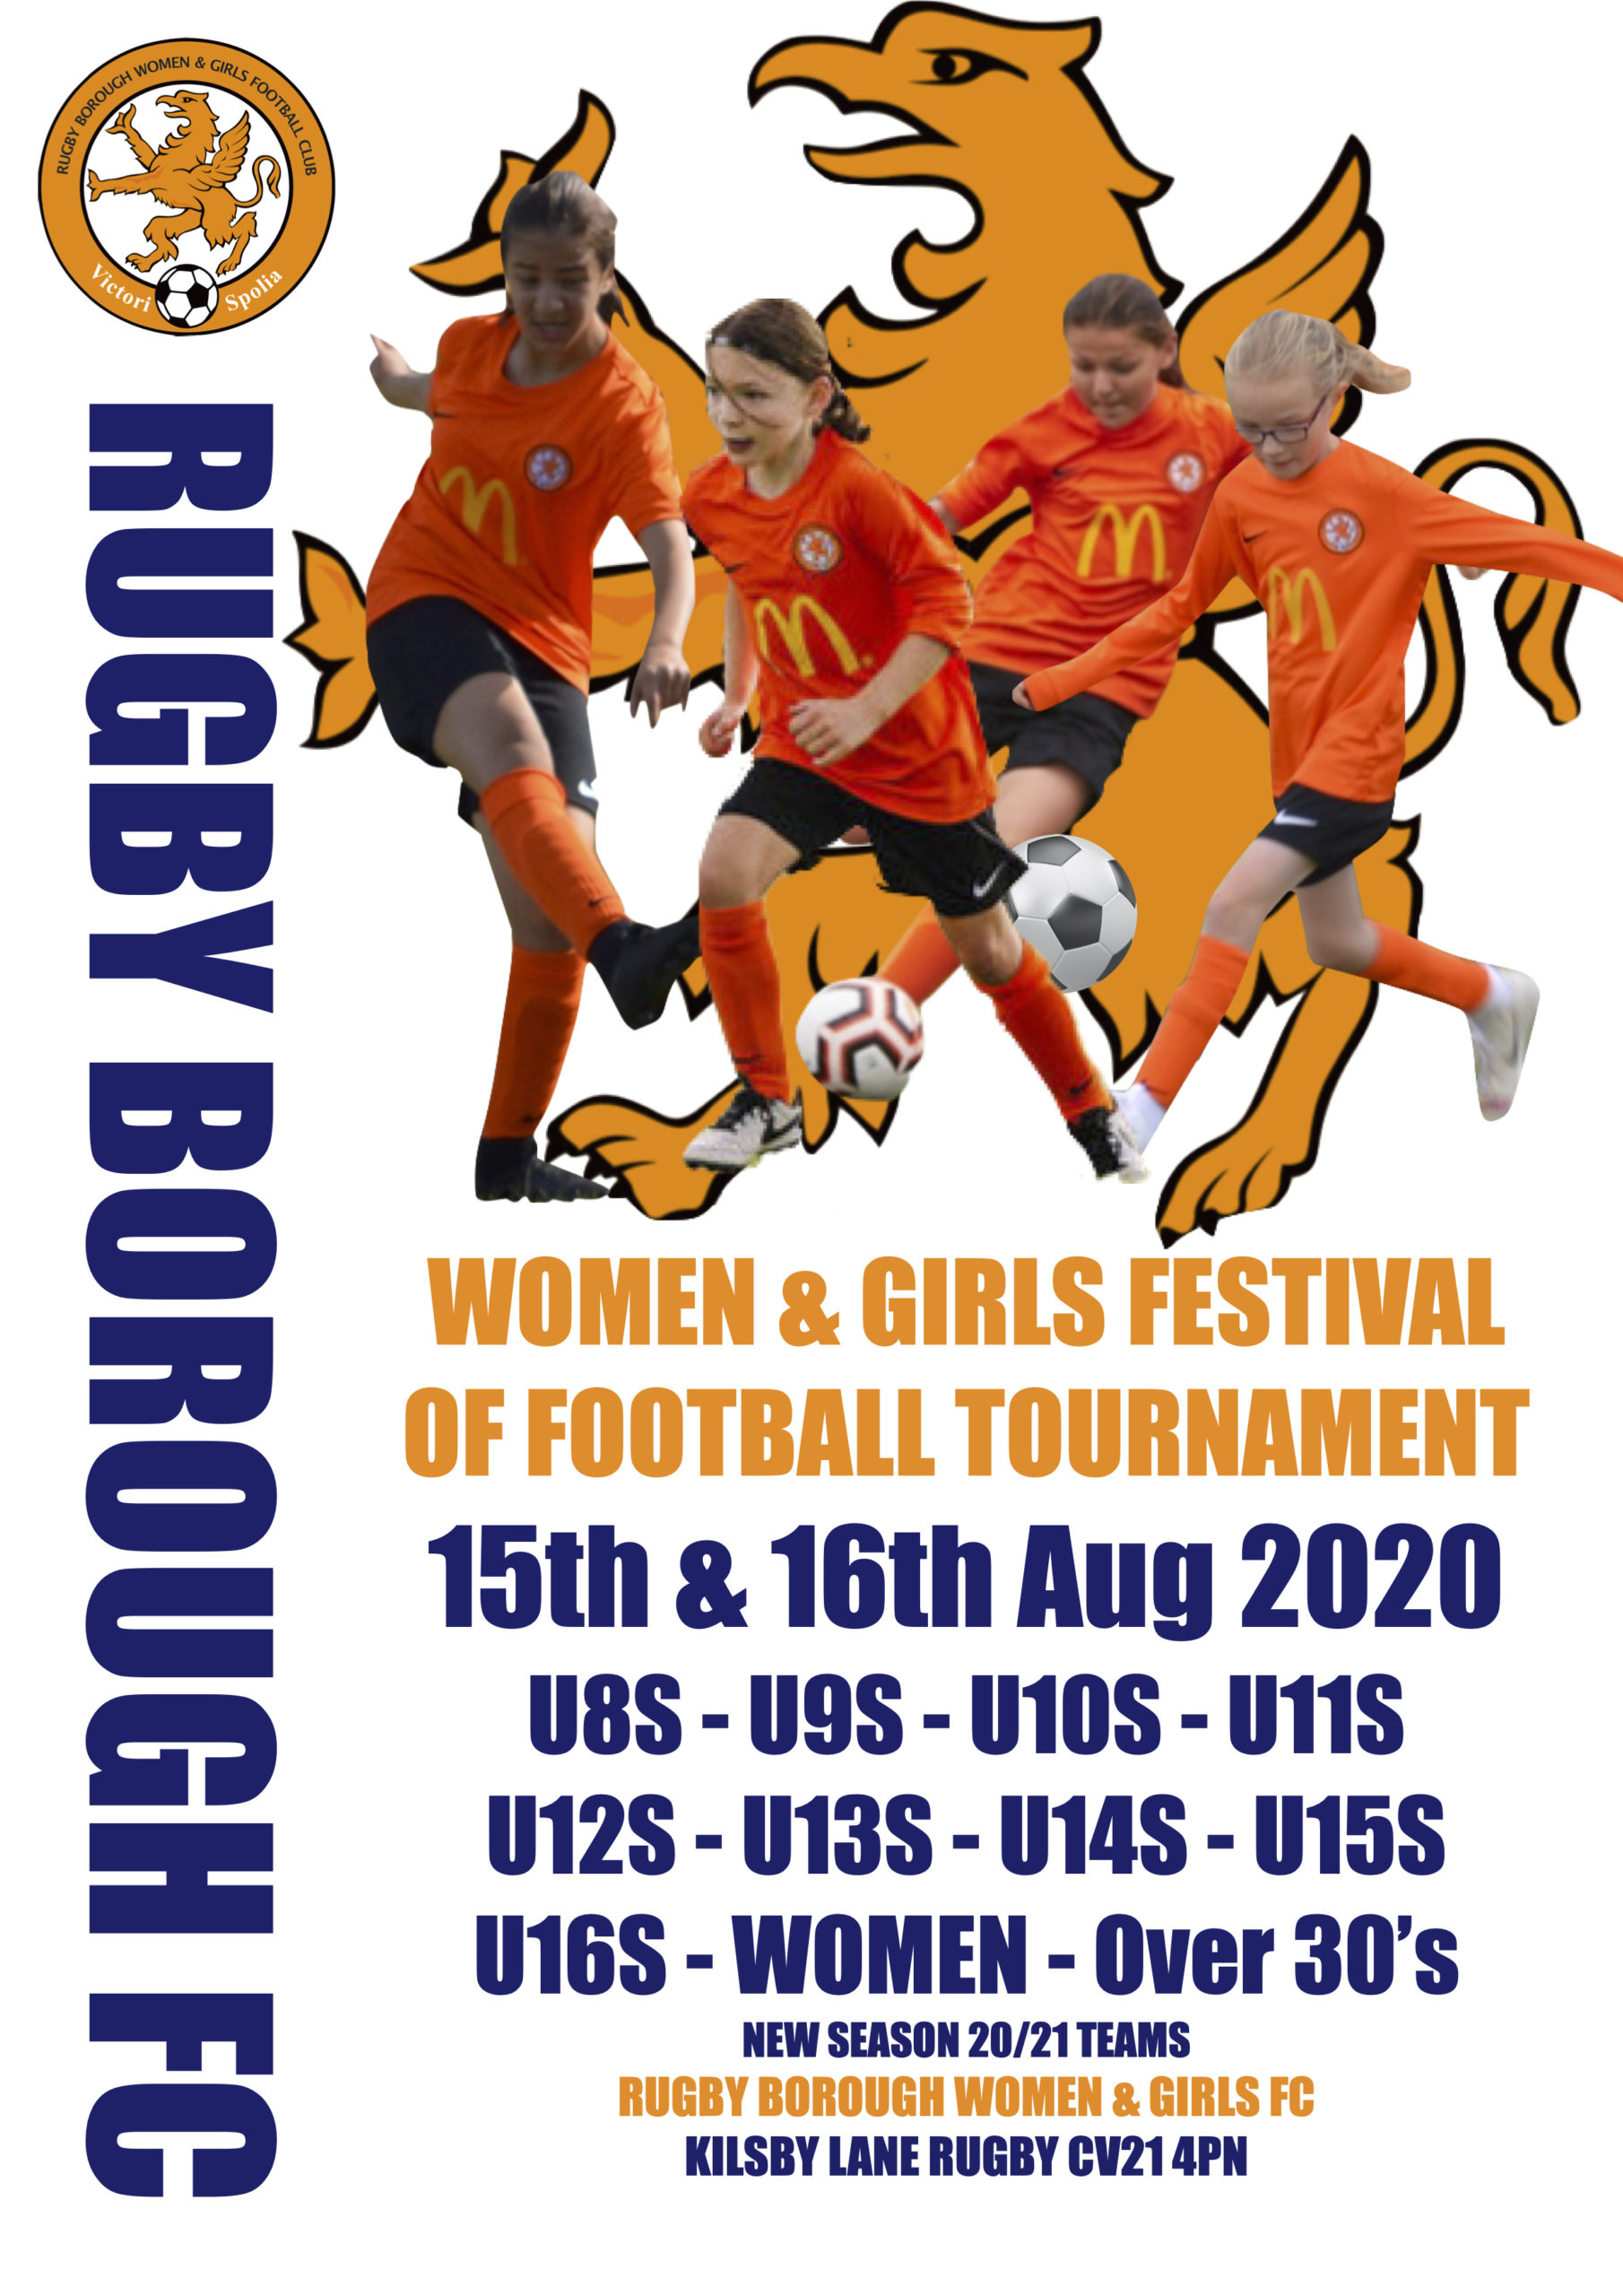 Rugby Borough Women & Girls Festival of Football 2020 | Rugby Borough FC